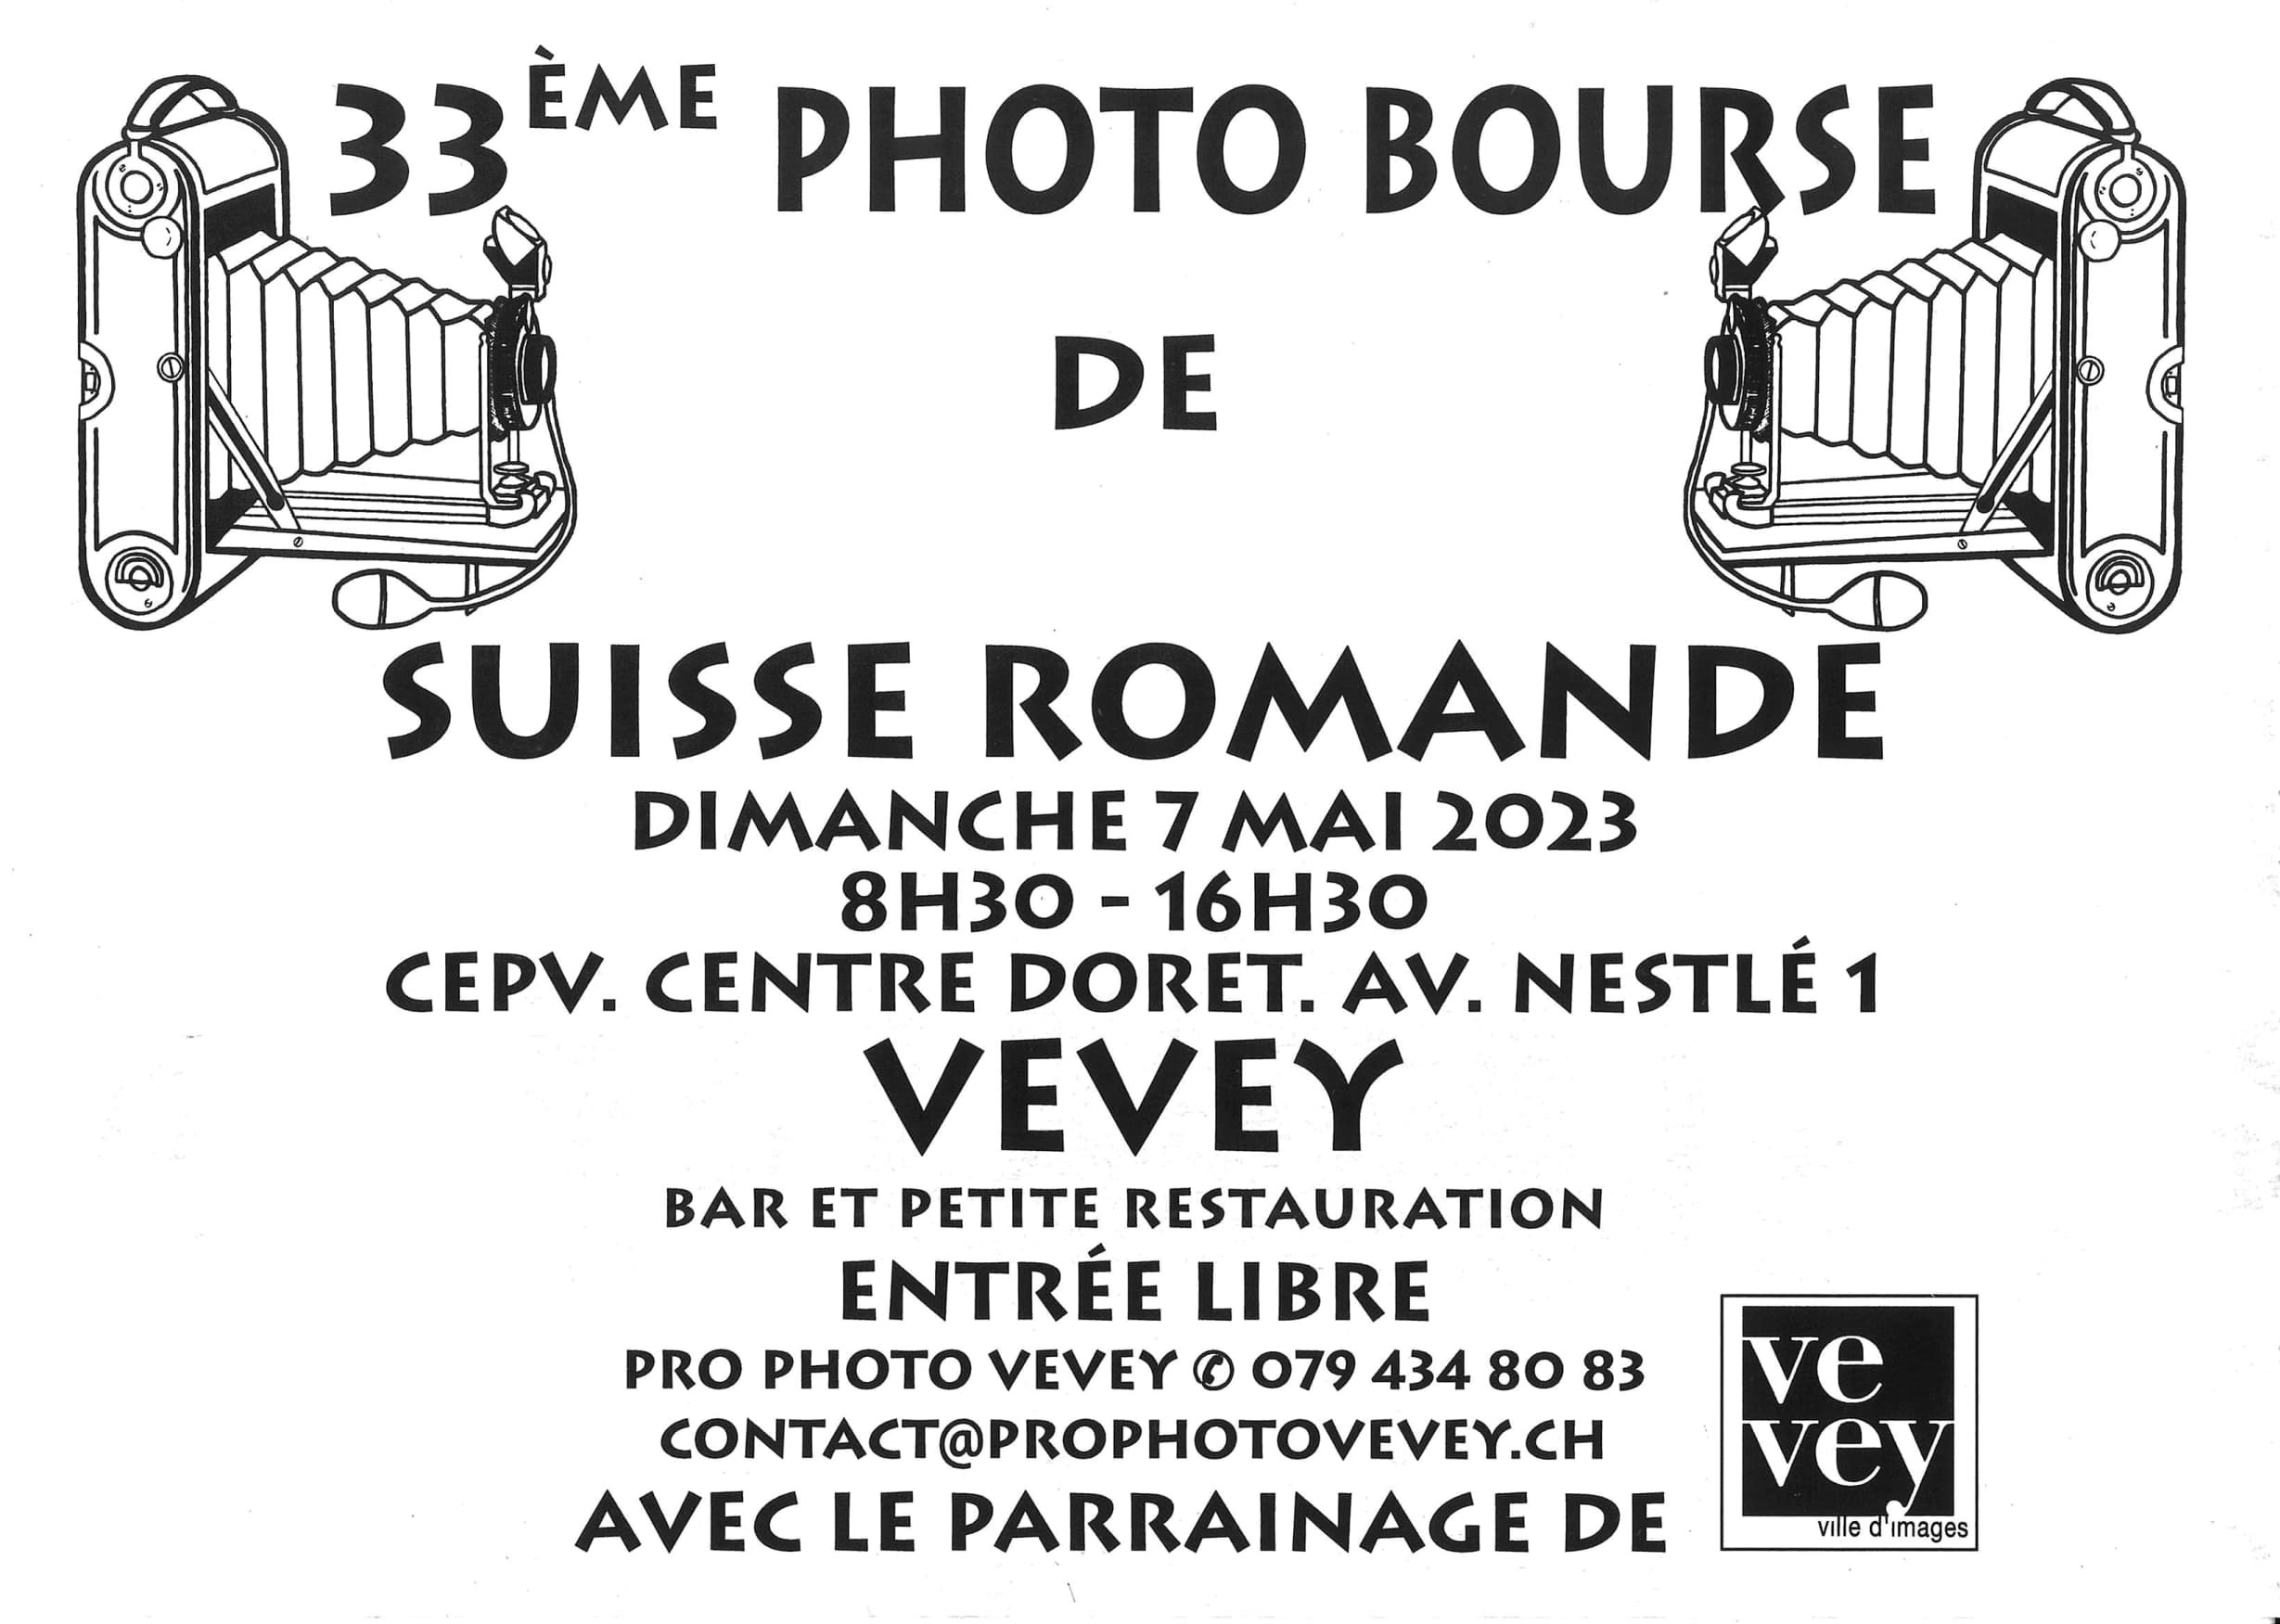 Vevey, 33e Photo bourse de Suisse Romande